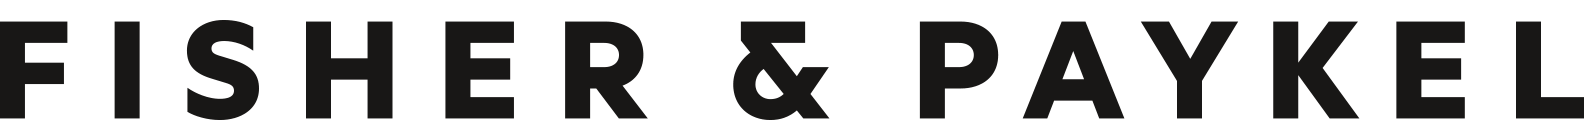 Fisherpaykel-logo